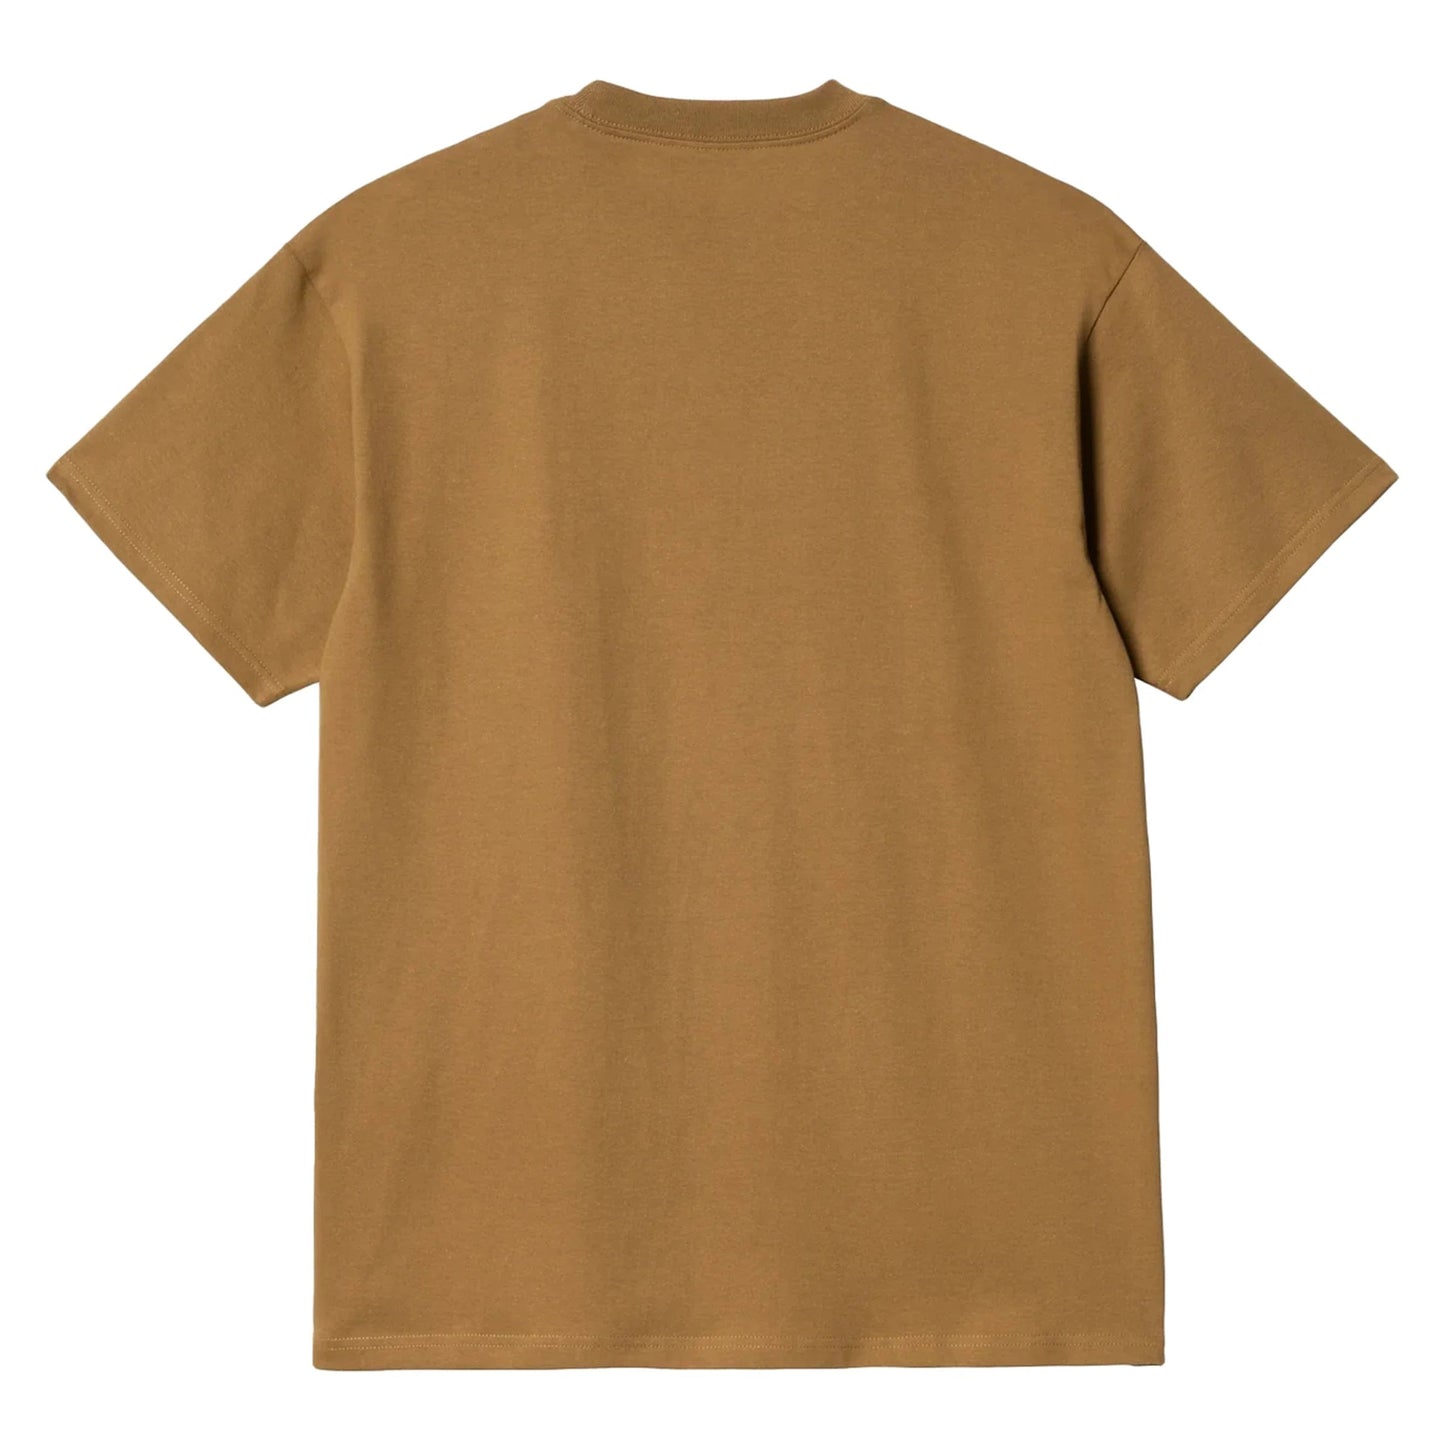 Carhartt WIP T-Shirts GROUNDWORKS T-SHIRT